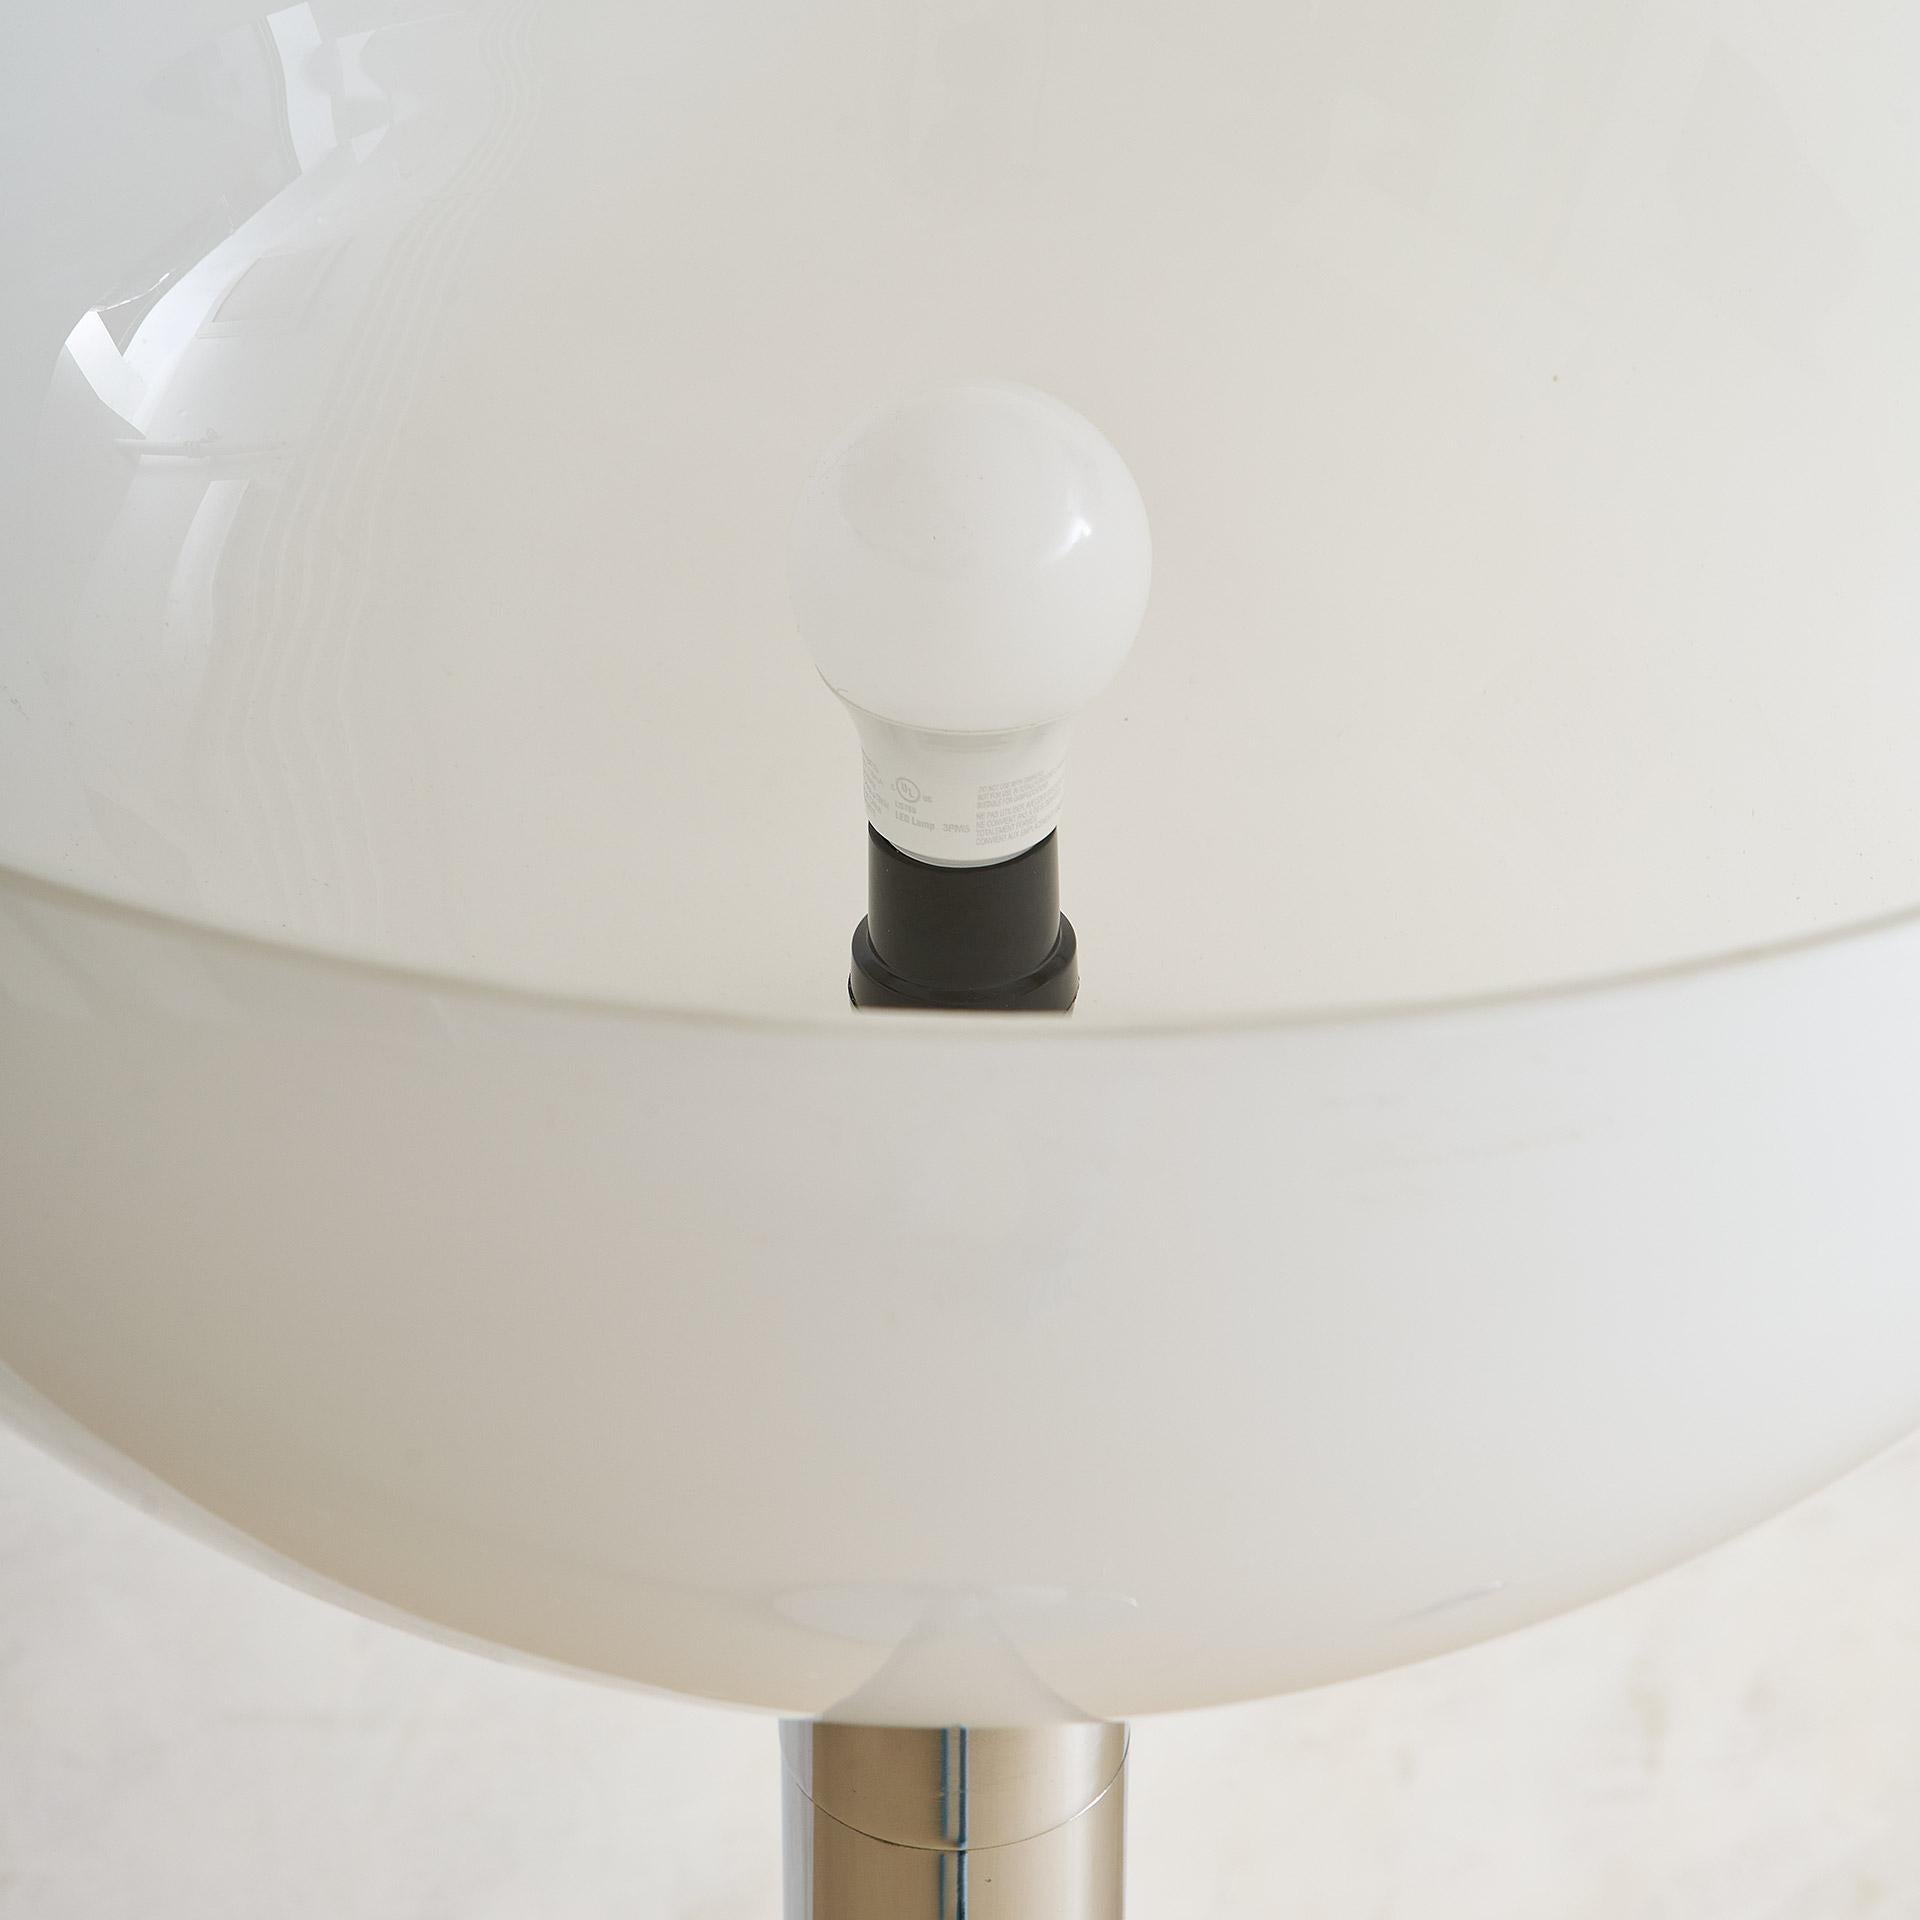 Glass Franco Albini & Franca Helg AM/AS Floor Lamp for Sirrah, 1968, Italy